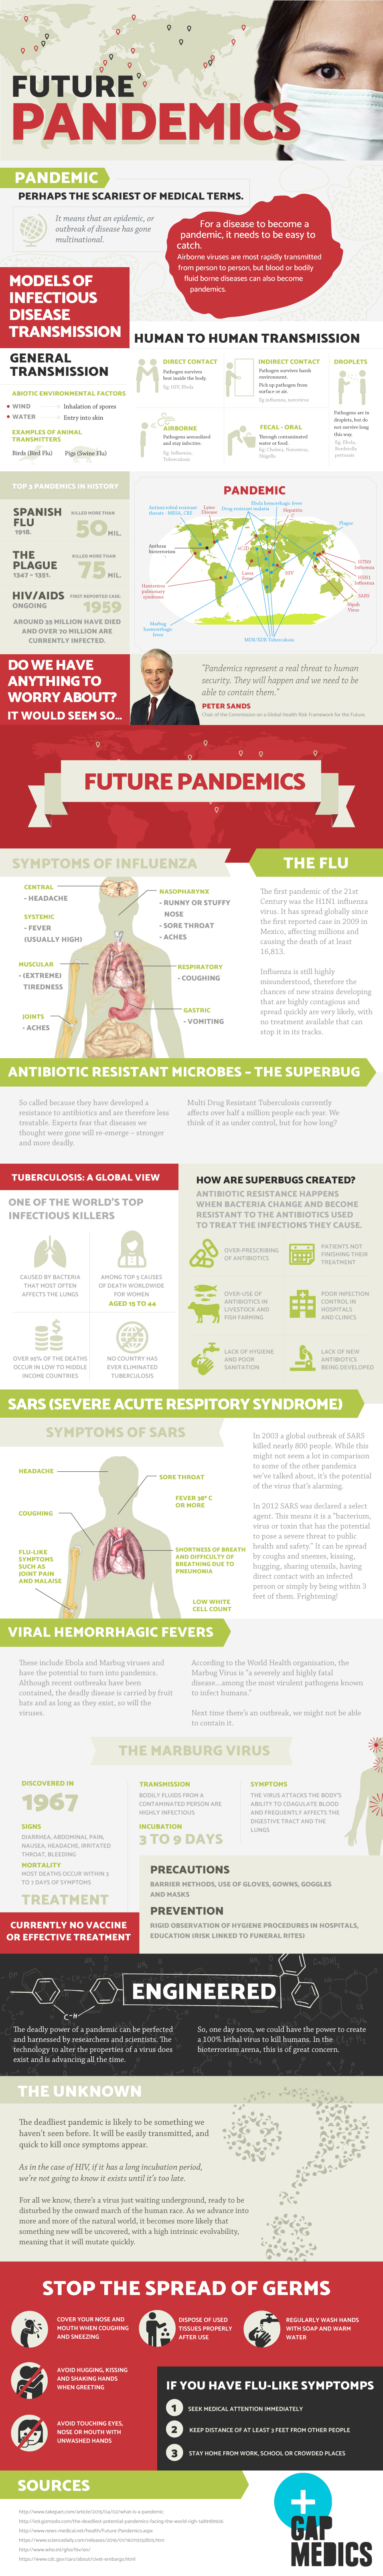 future pandemics infographic